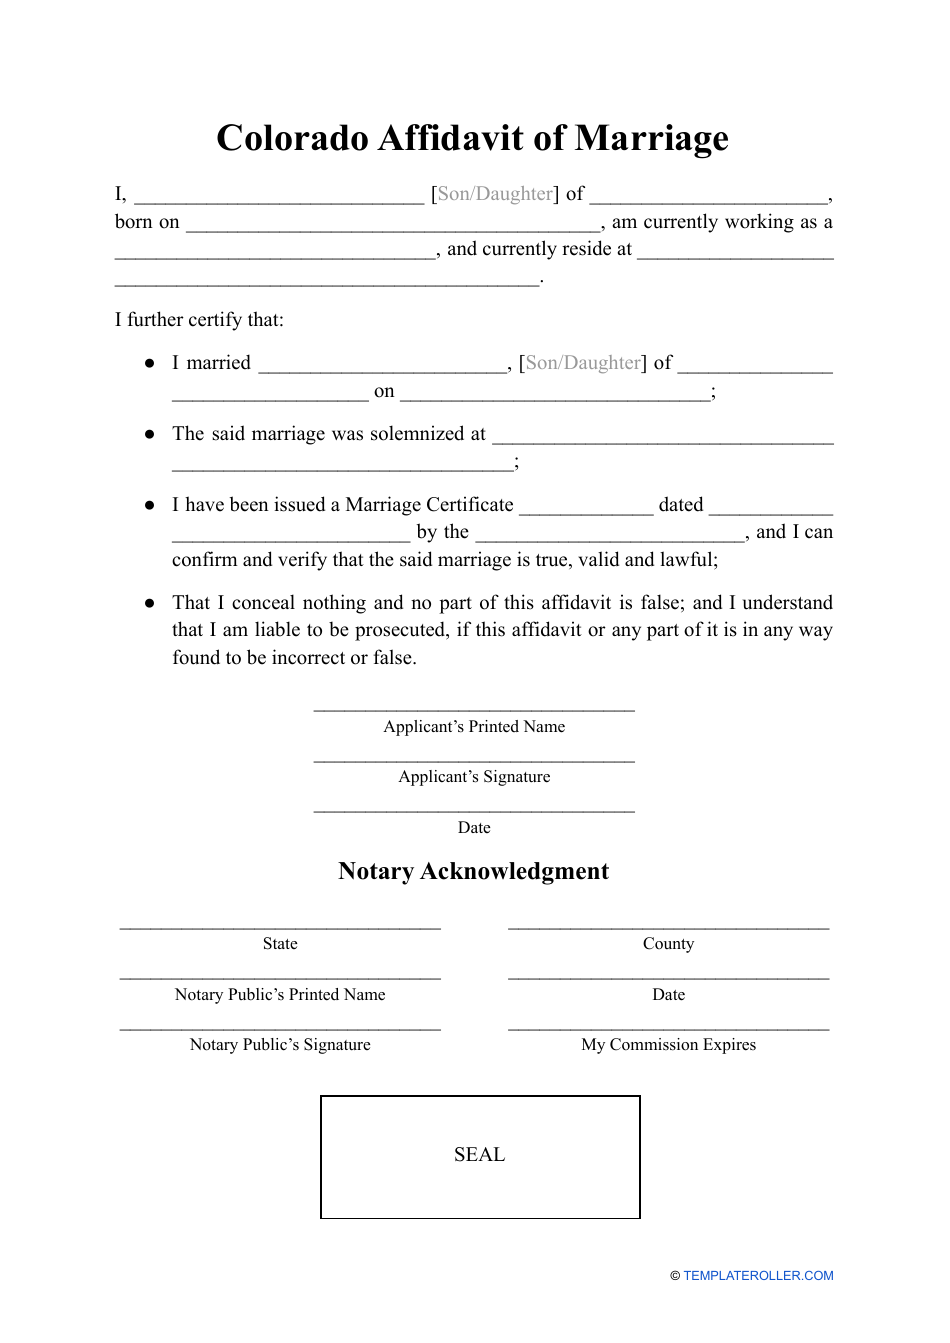 Affidavit of Marriage - Colorado, Page 1